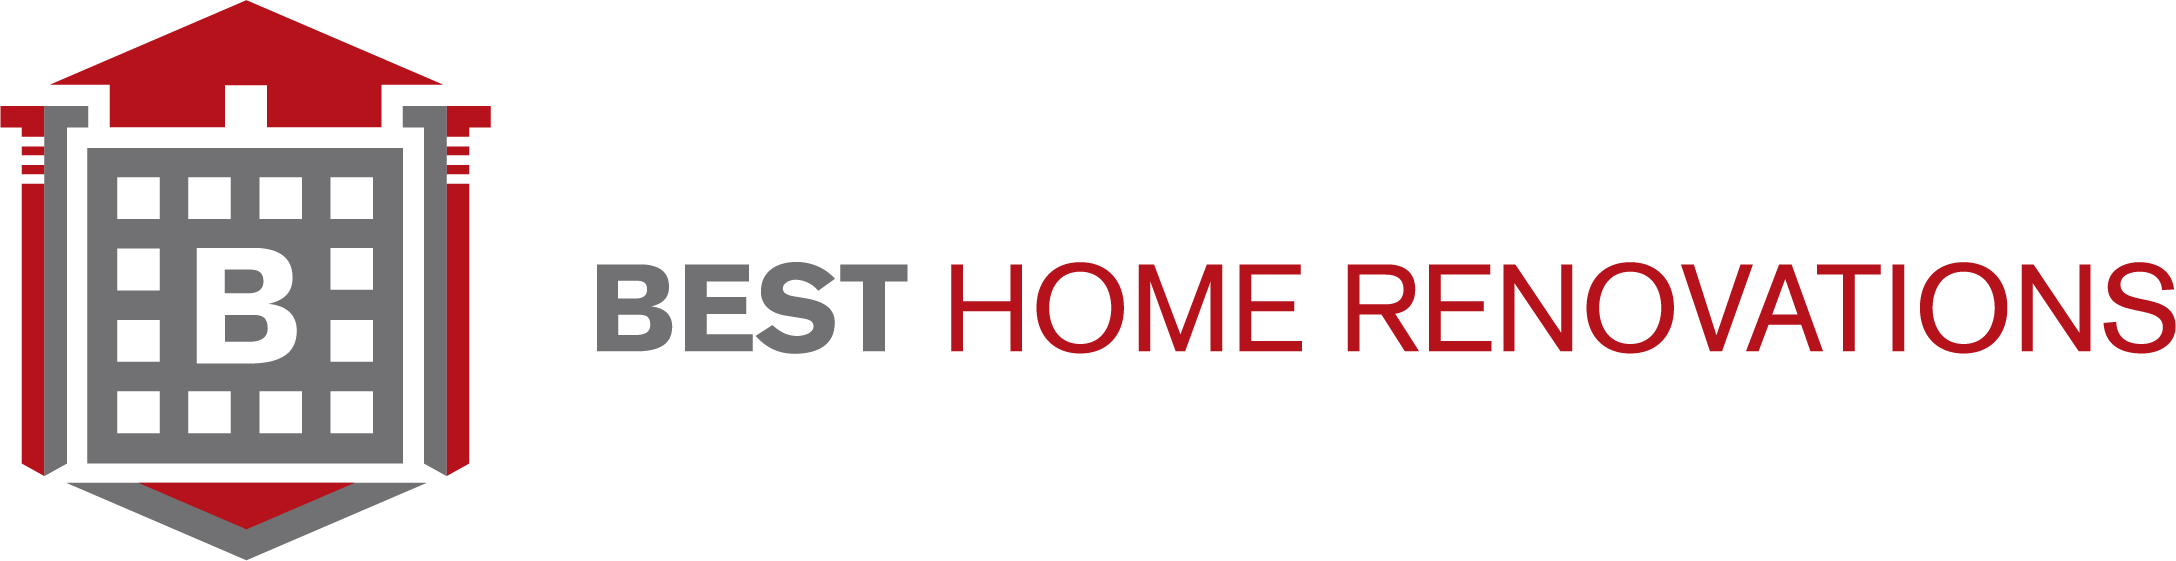 BEST HOME RENOVATIONS INC. Logo